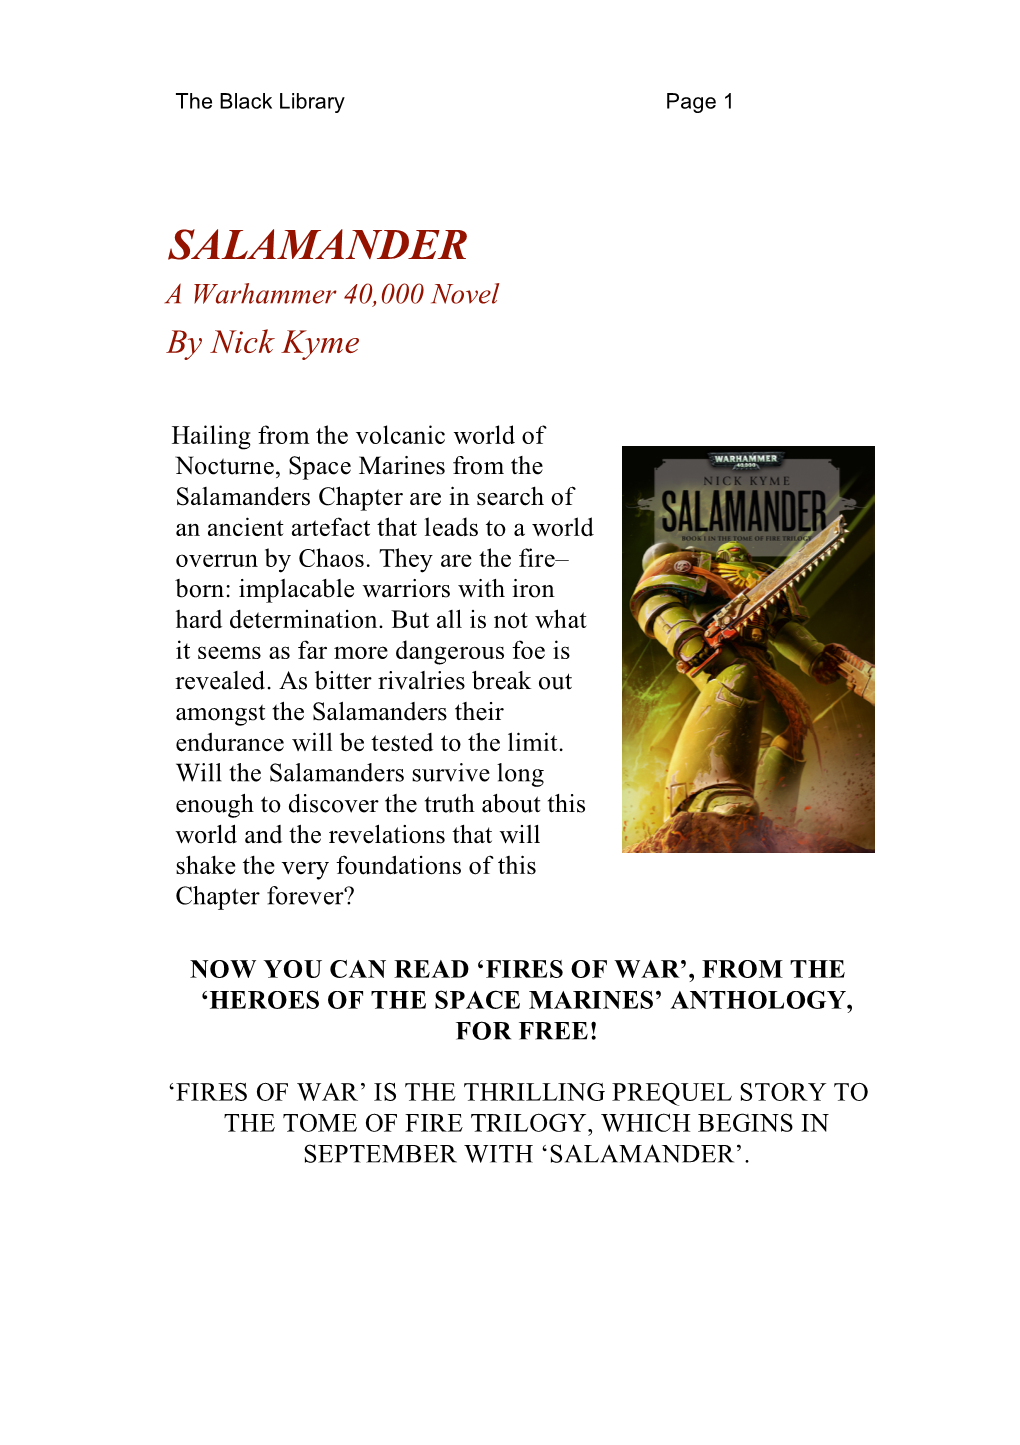 SALAMANDER a Warhammer 40,000 Novel by Nick Kyme